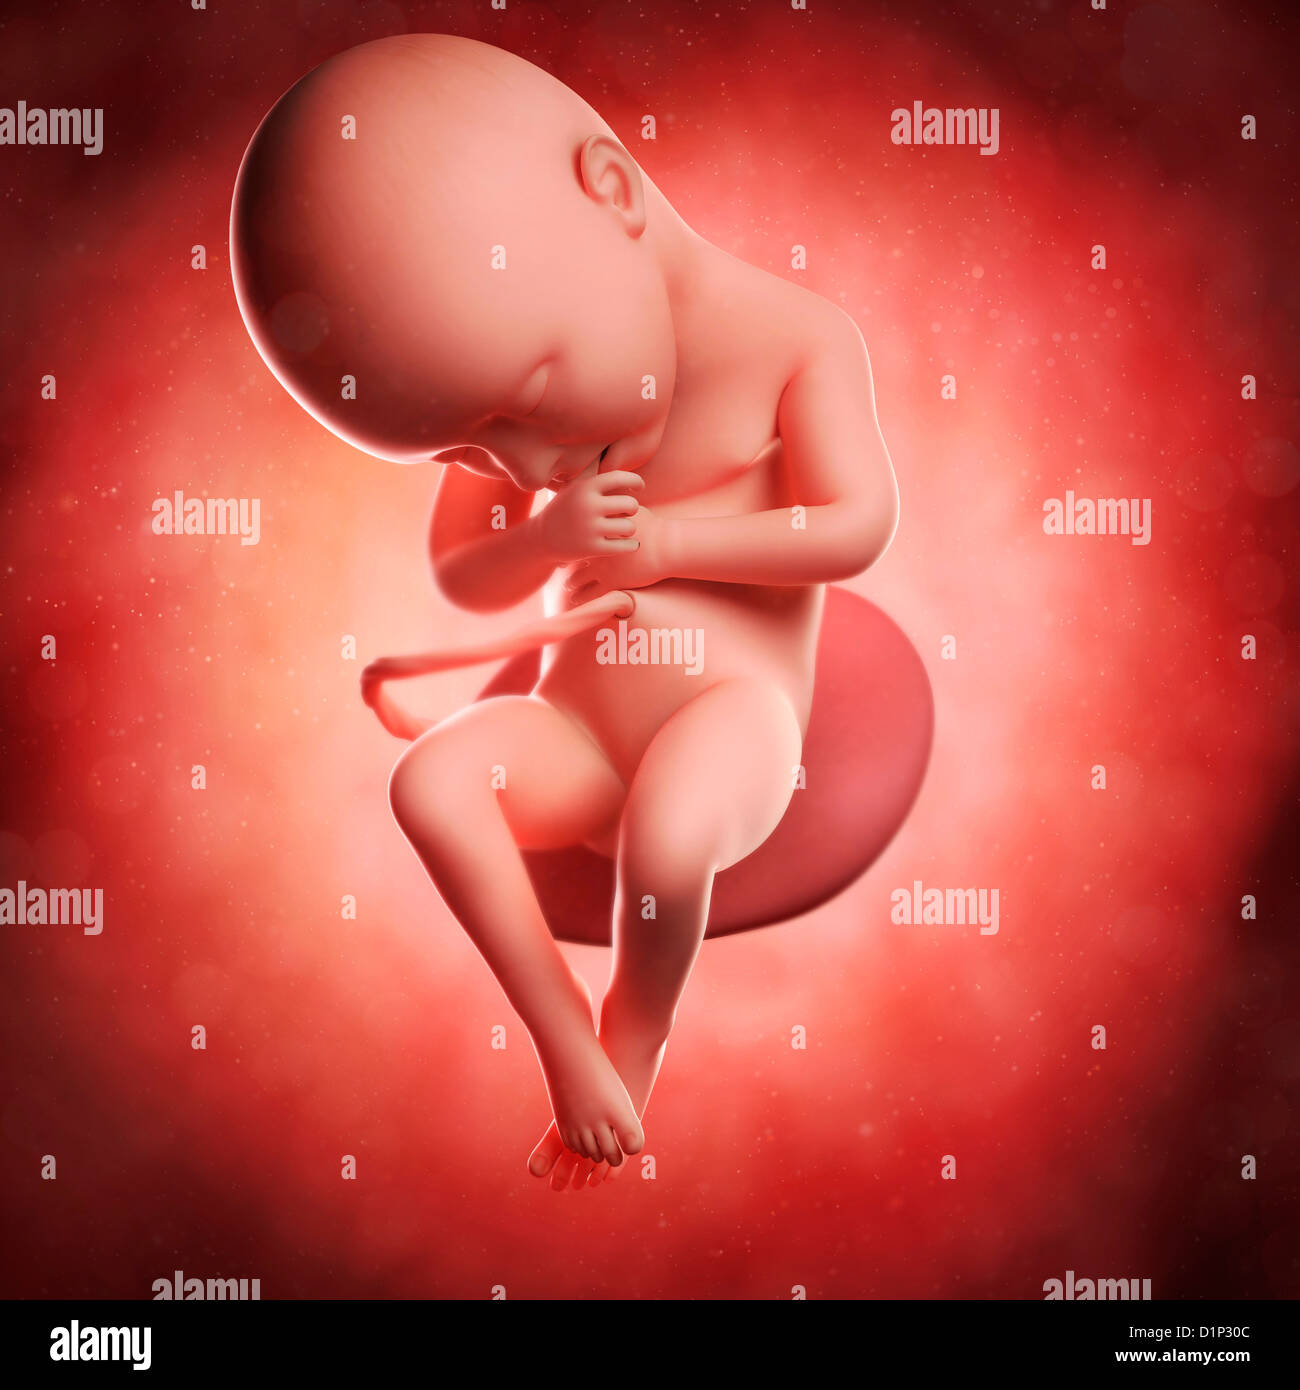 Foetus at 36 weeks, artwork Stock Photo